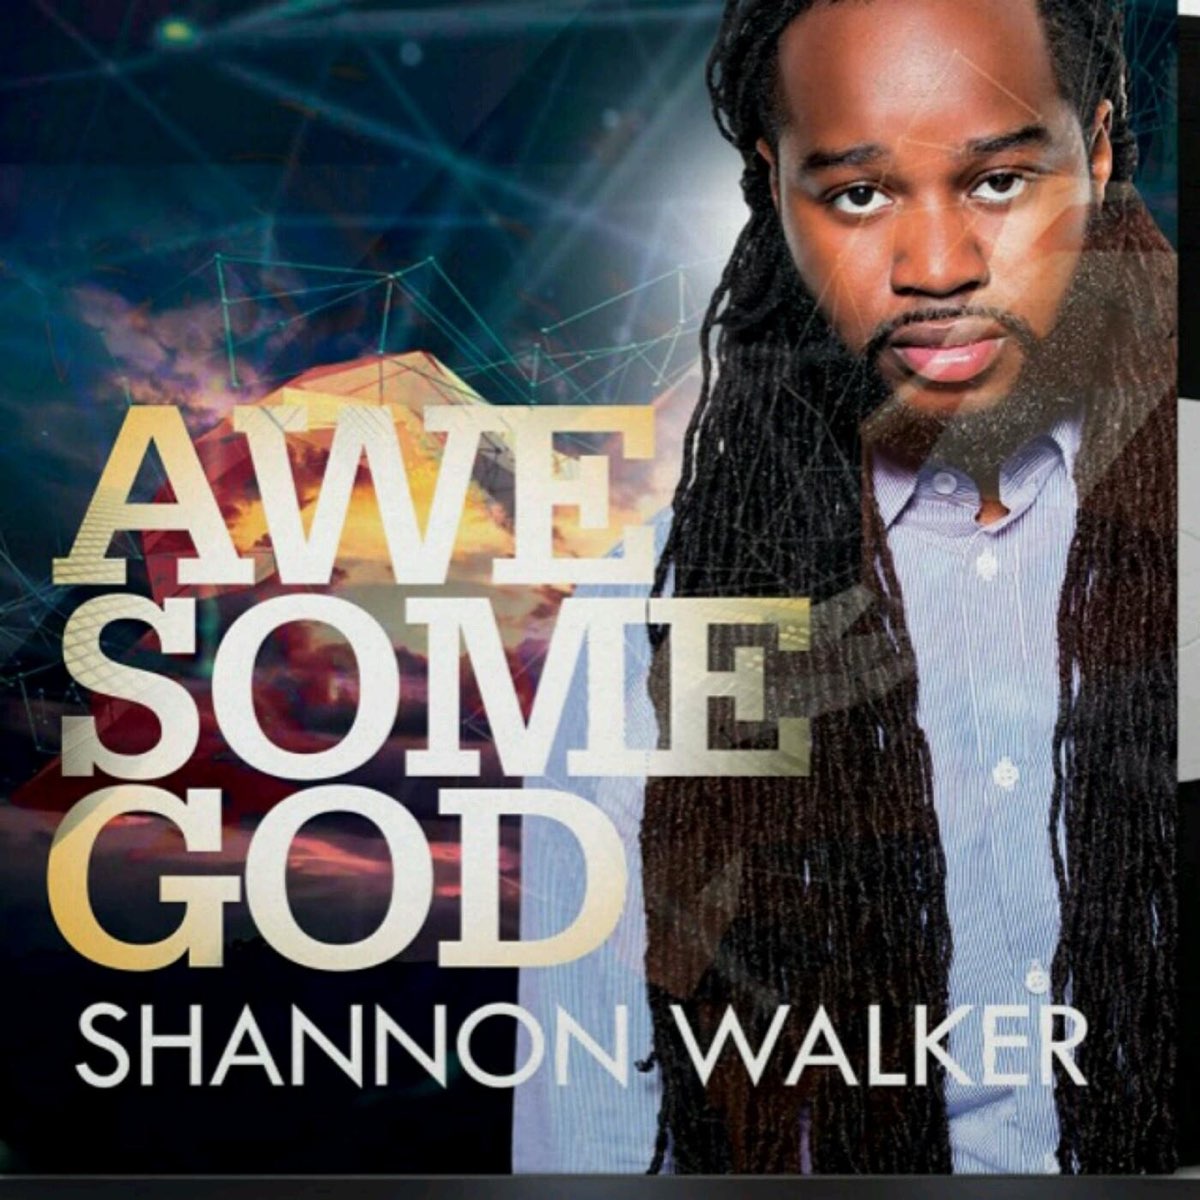 Awesome god. Walker Shannon.